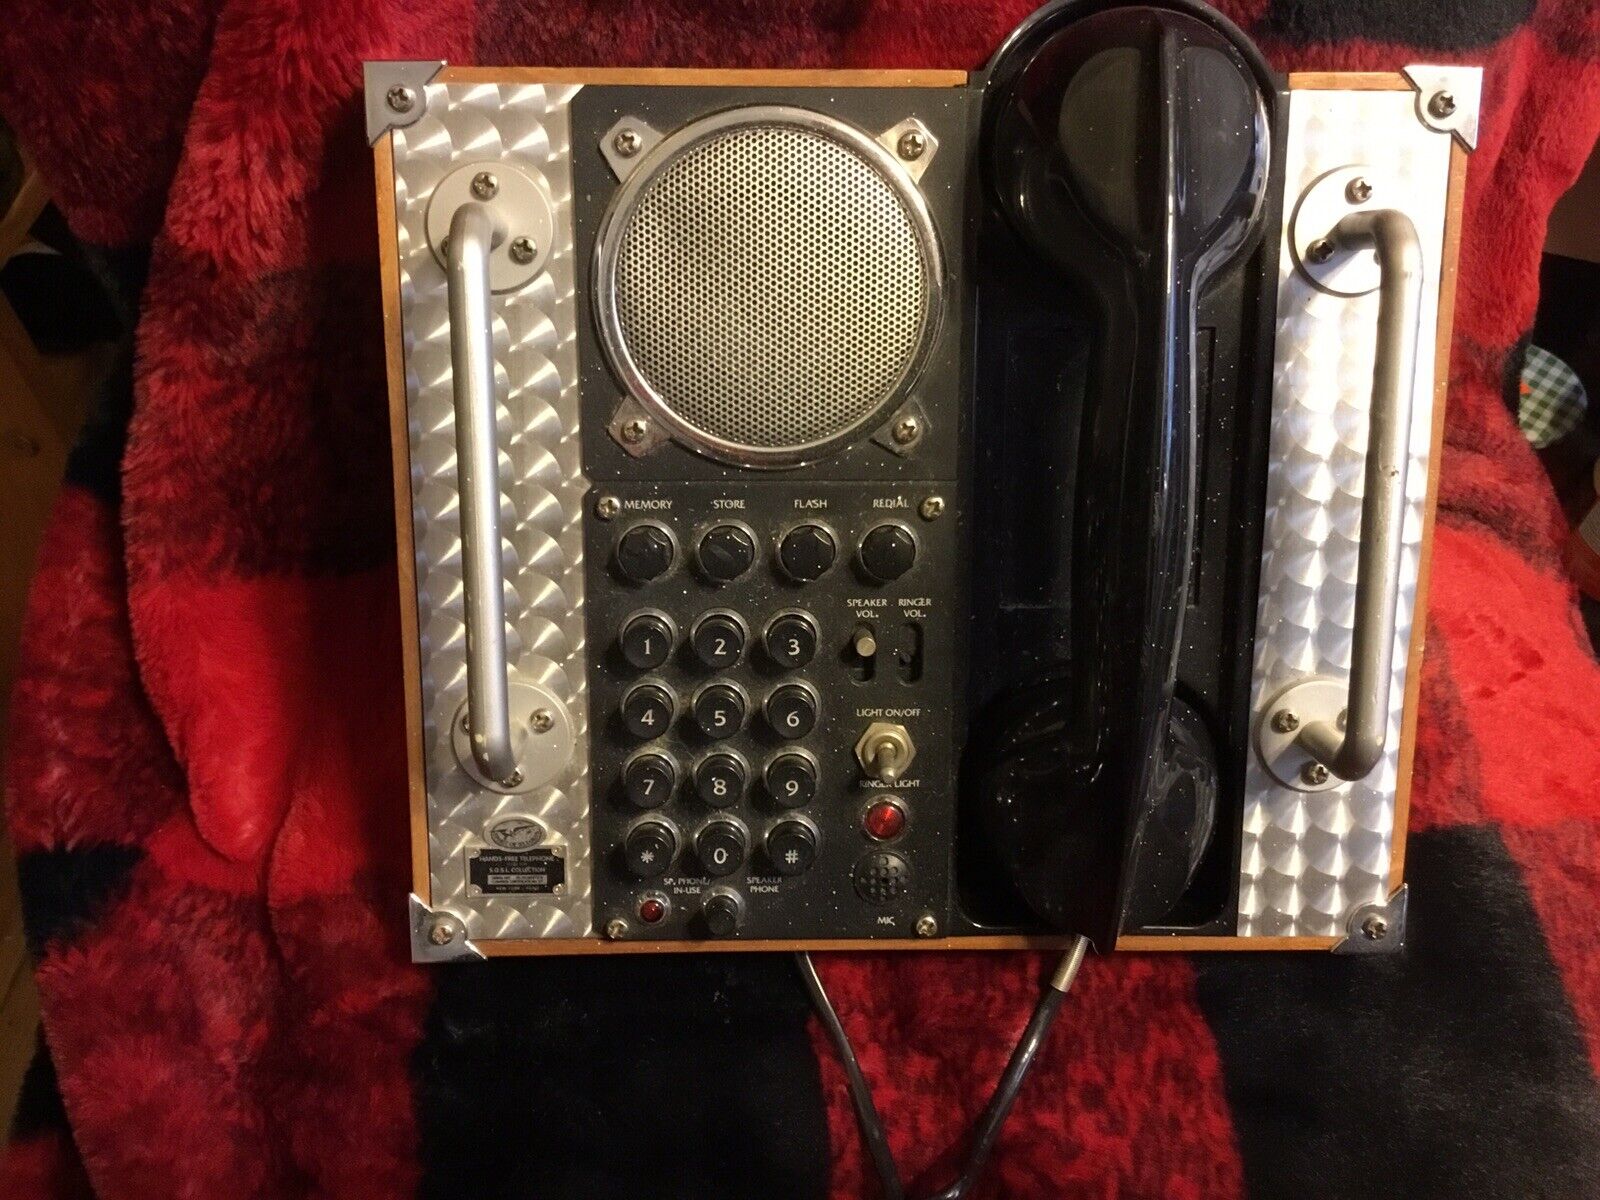 Vintage Spirit of St Louis Hands Free Speaker Telephone Aviation Retro